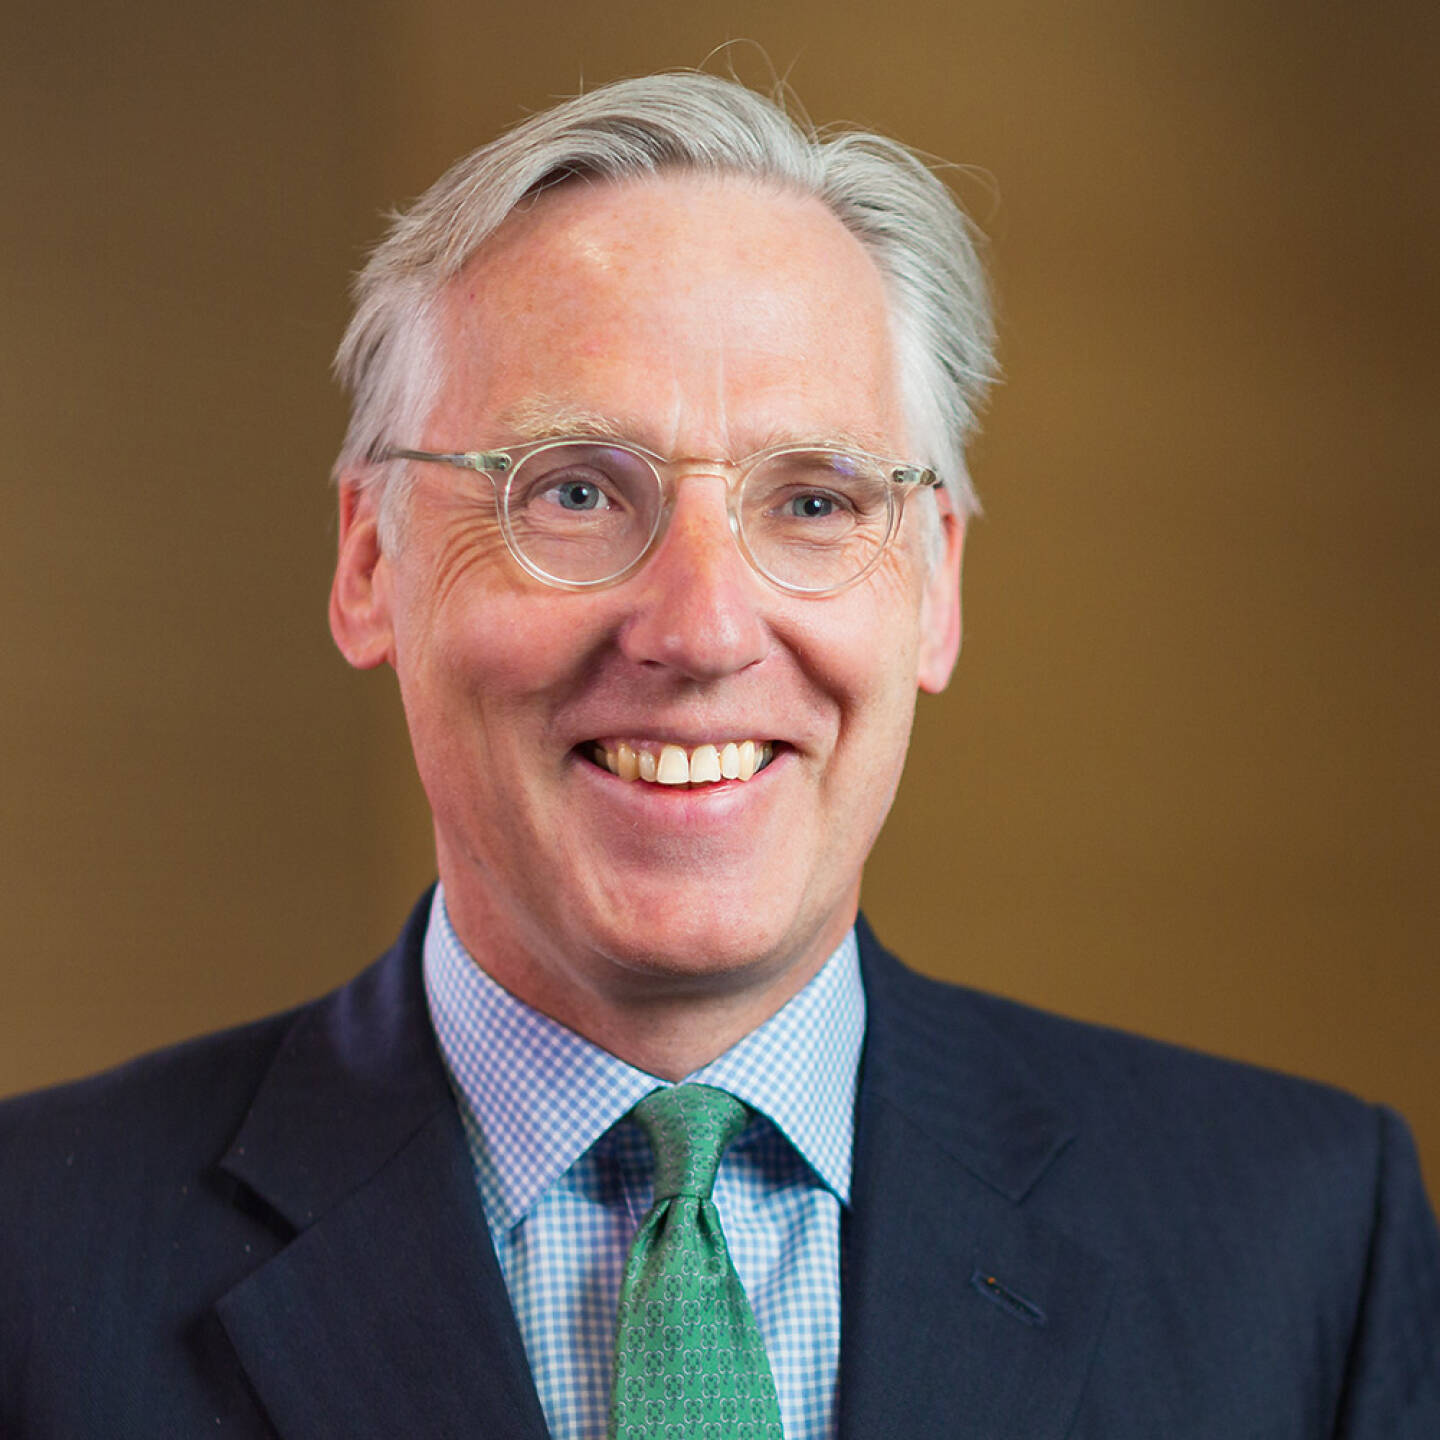 David Cumming neuer Chief Investment Officer bei Equities bei Aviva ernannt, Credit: Aviva